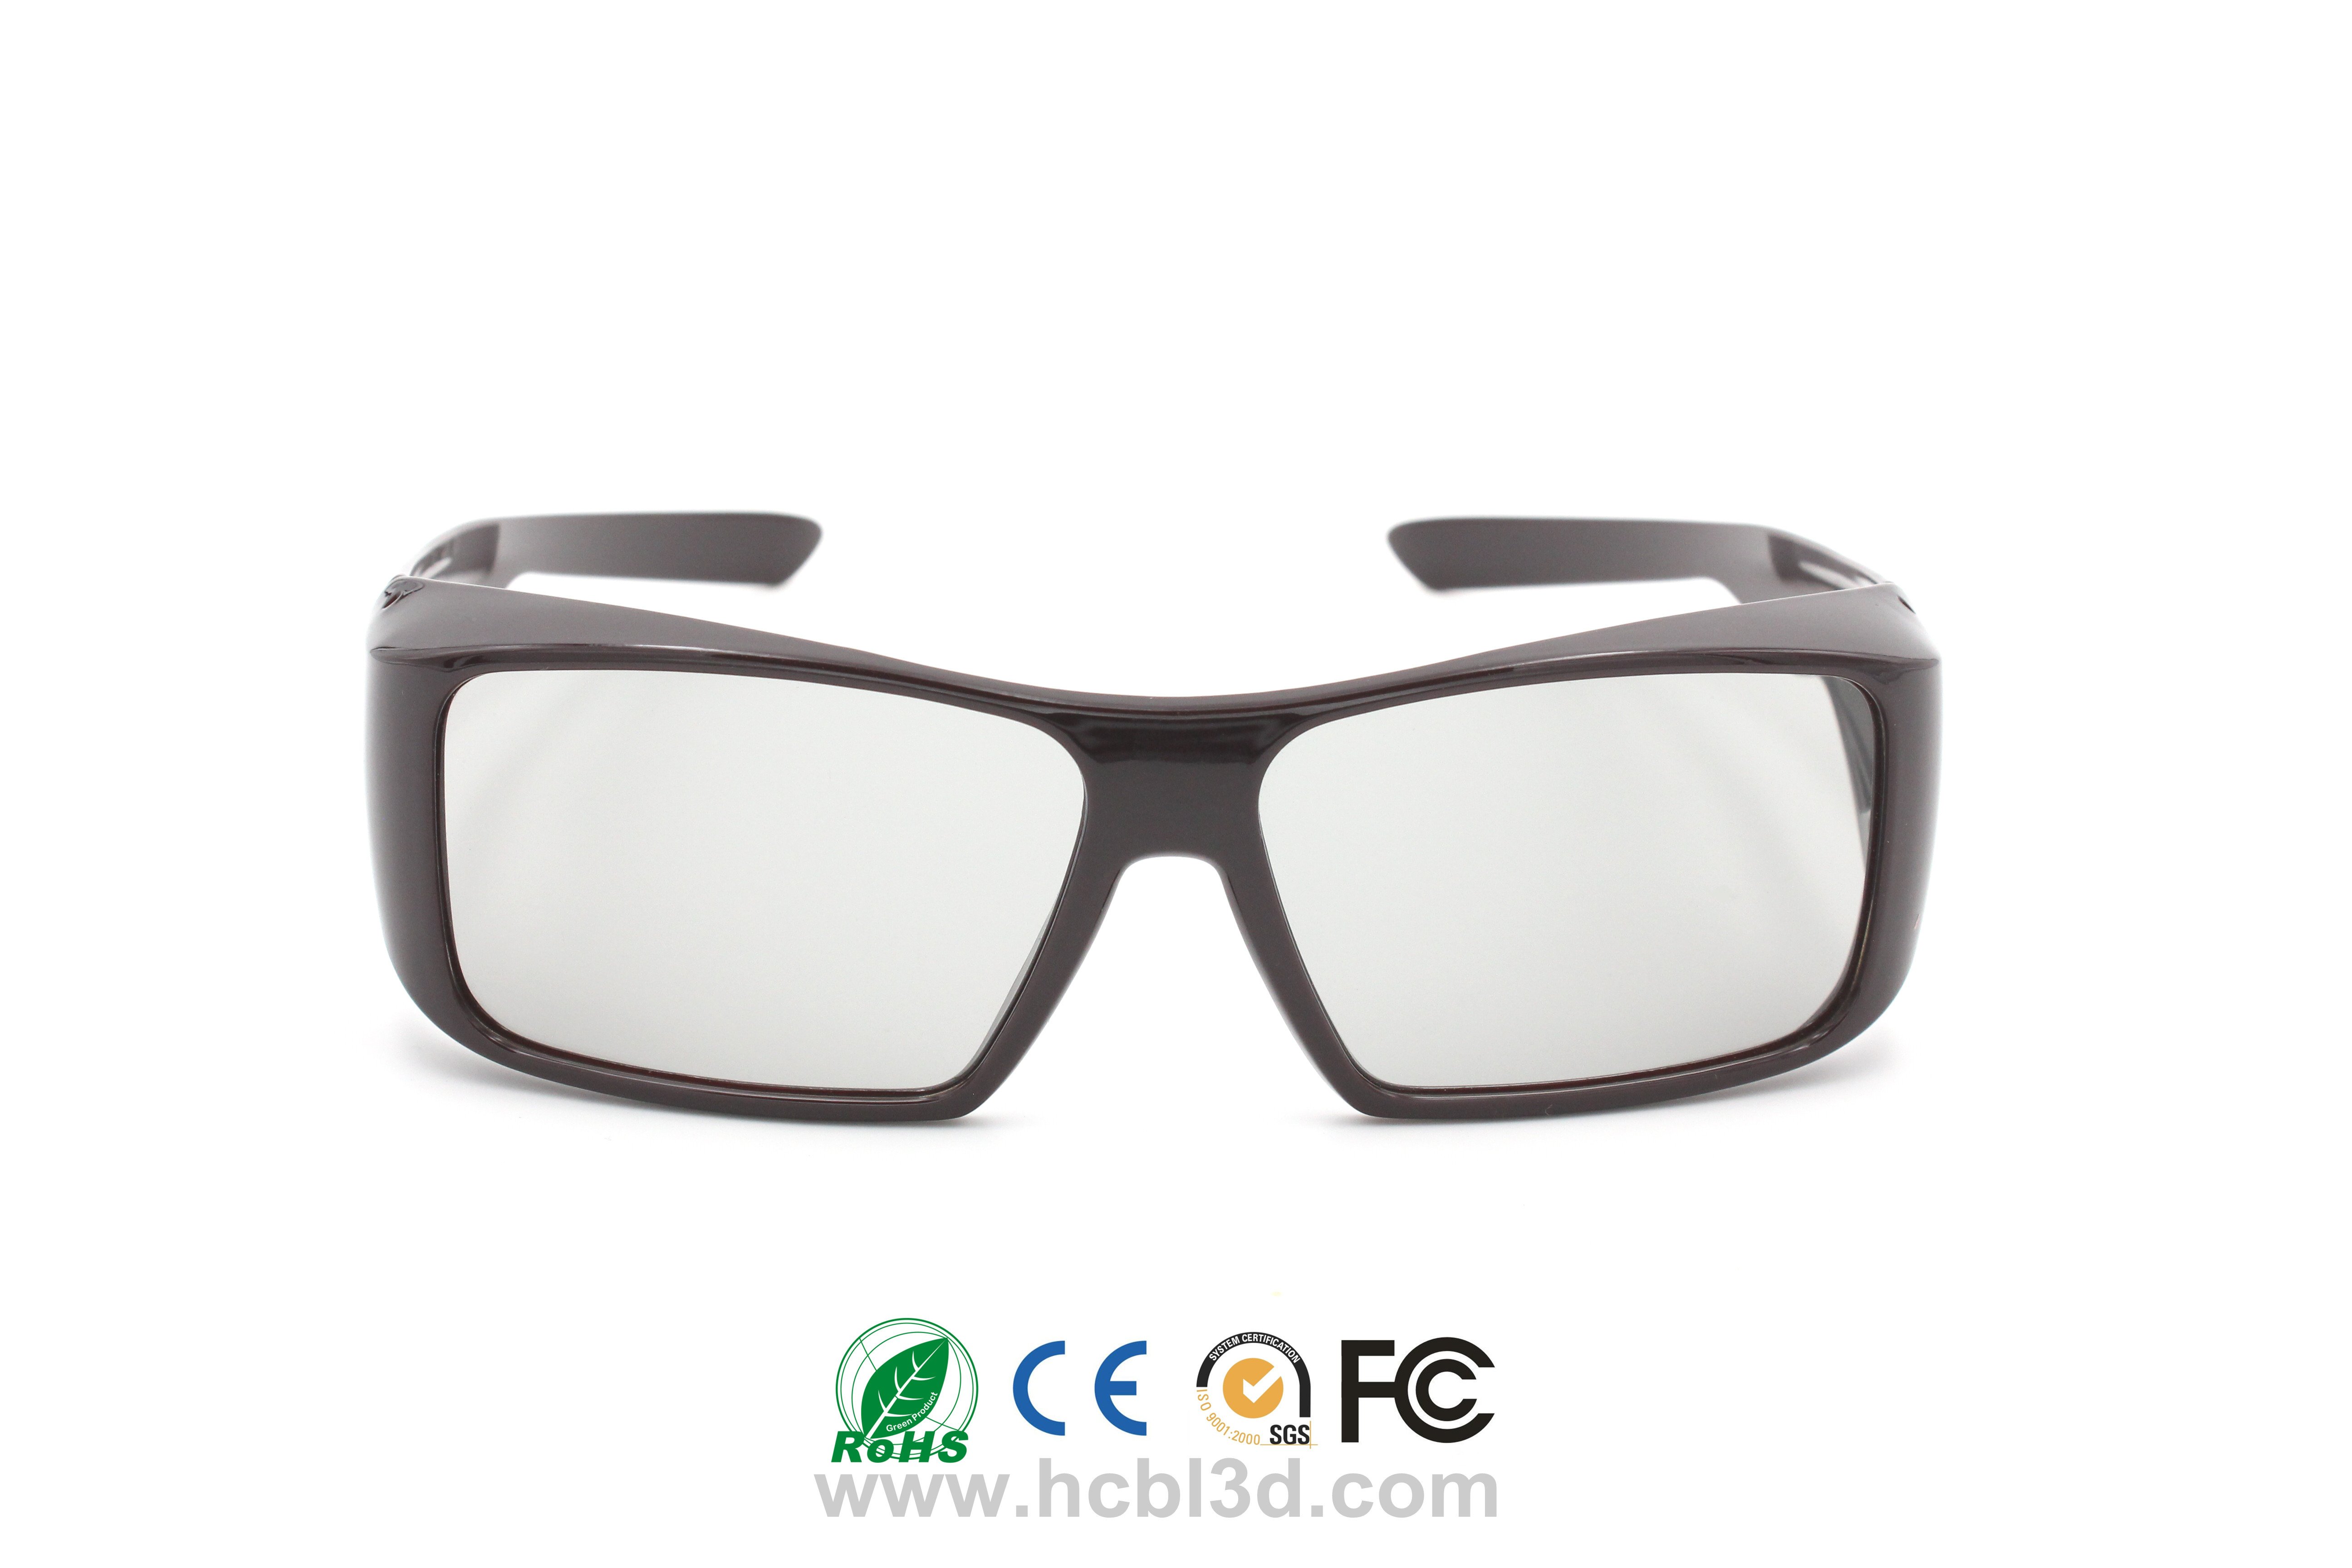 Reusable Passive Adult 3D glasses Rectangular Brown